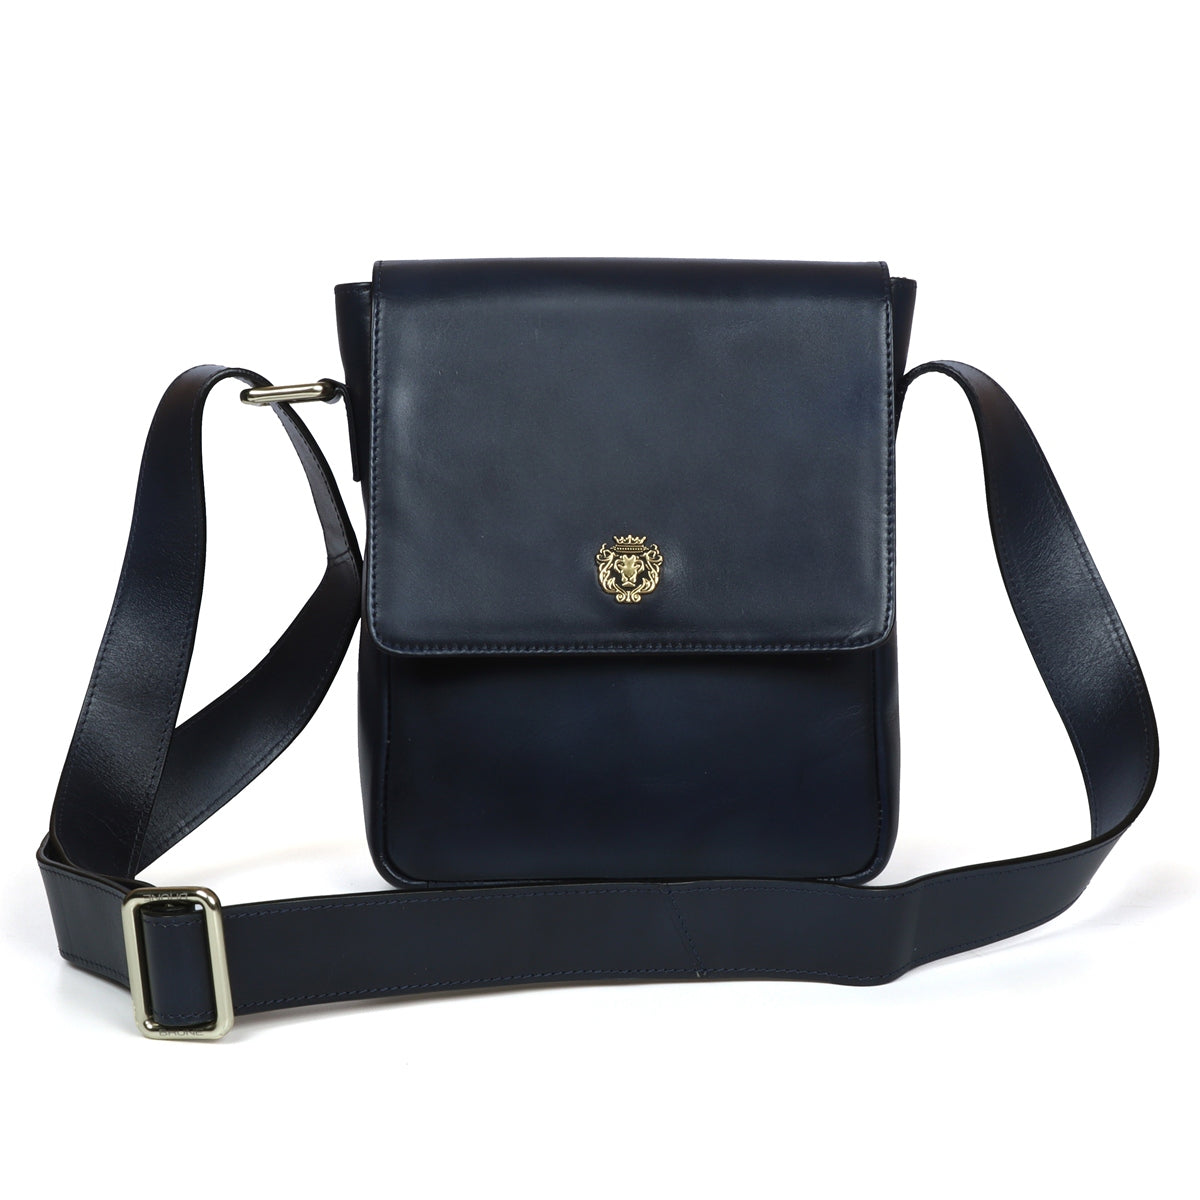 Buy online Navy Blue Textured Regular Sling Bag from bags for